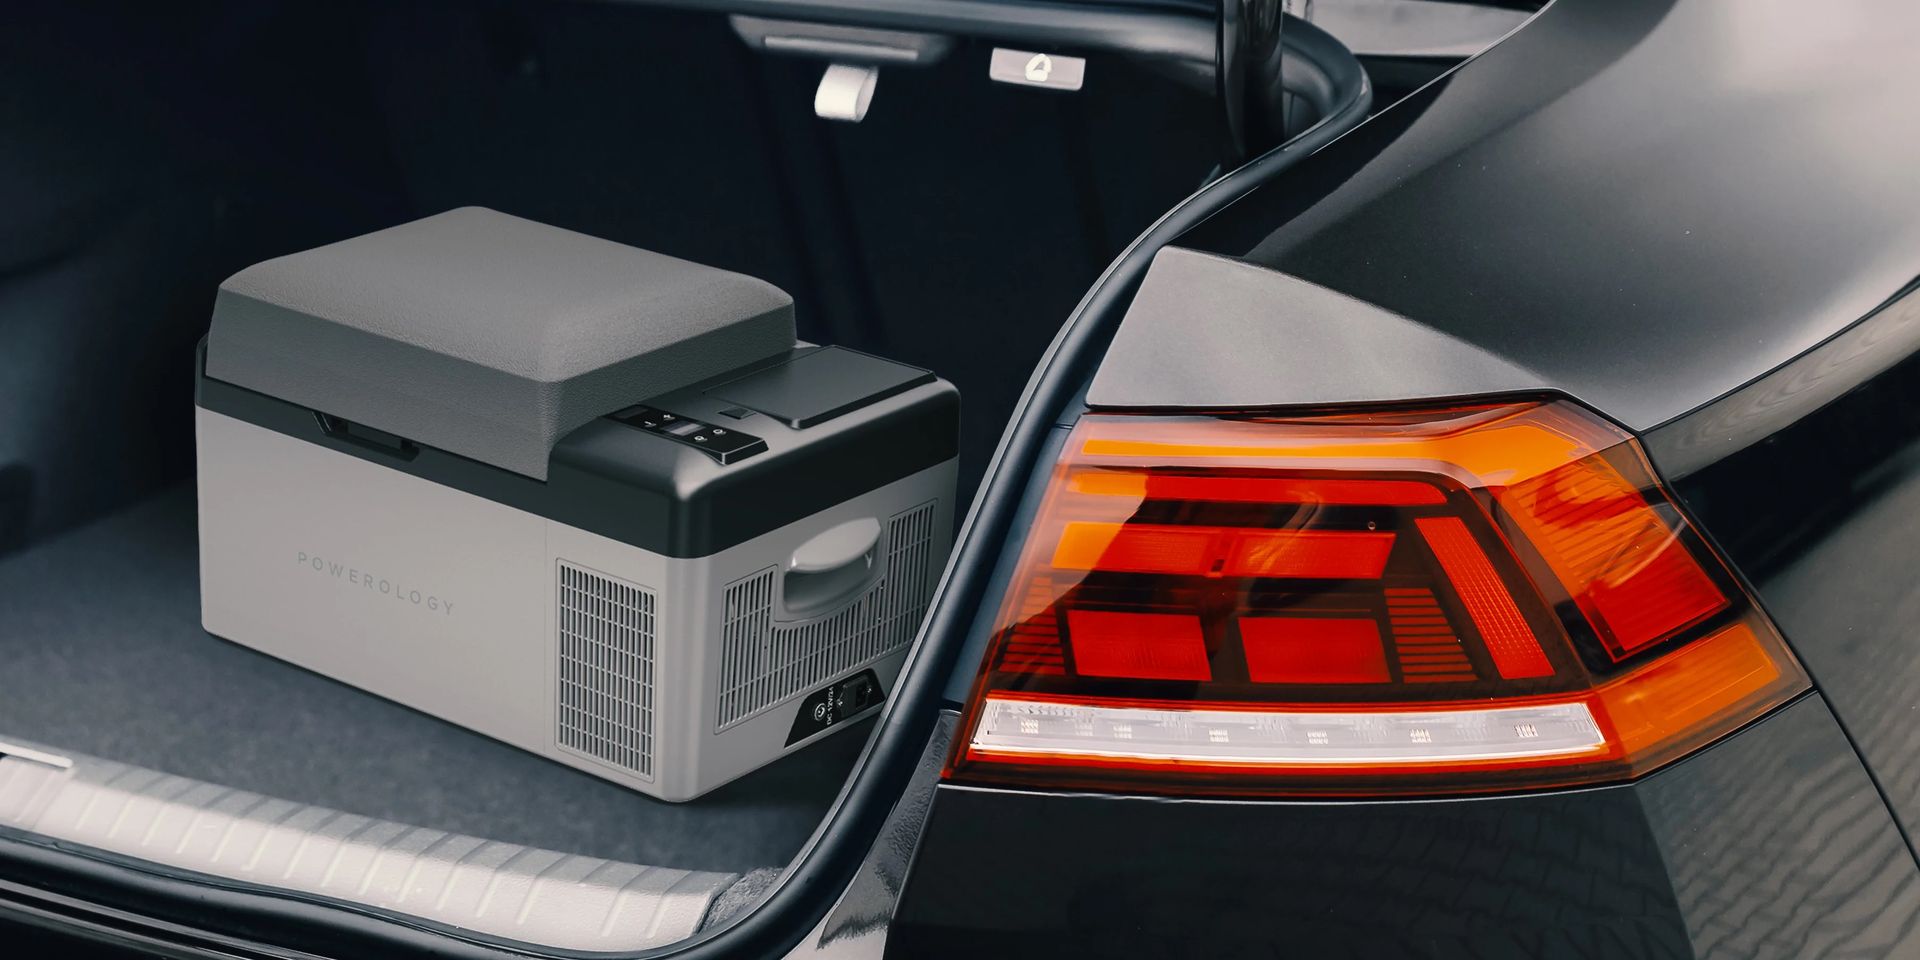 alt="Powerology Smart Portable Outdoor Fridge and Freezer in the car truck"